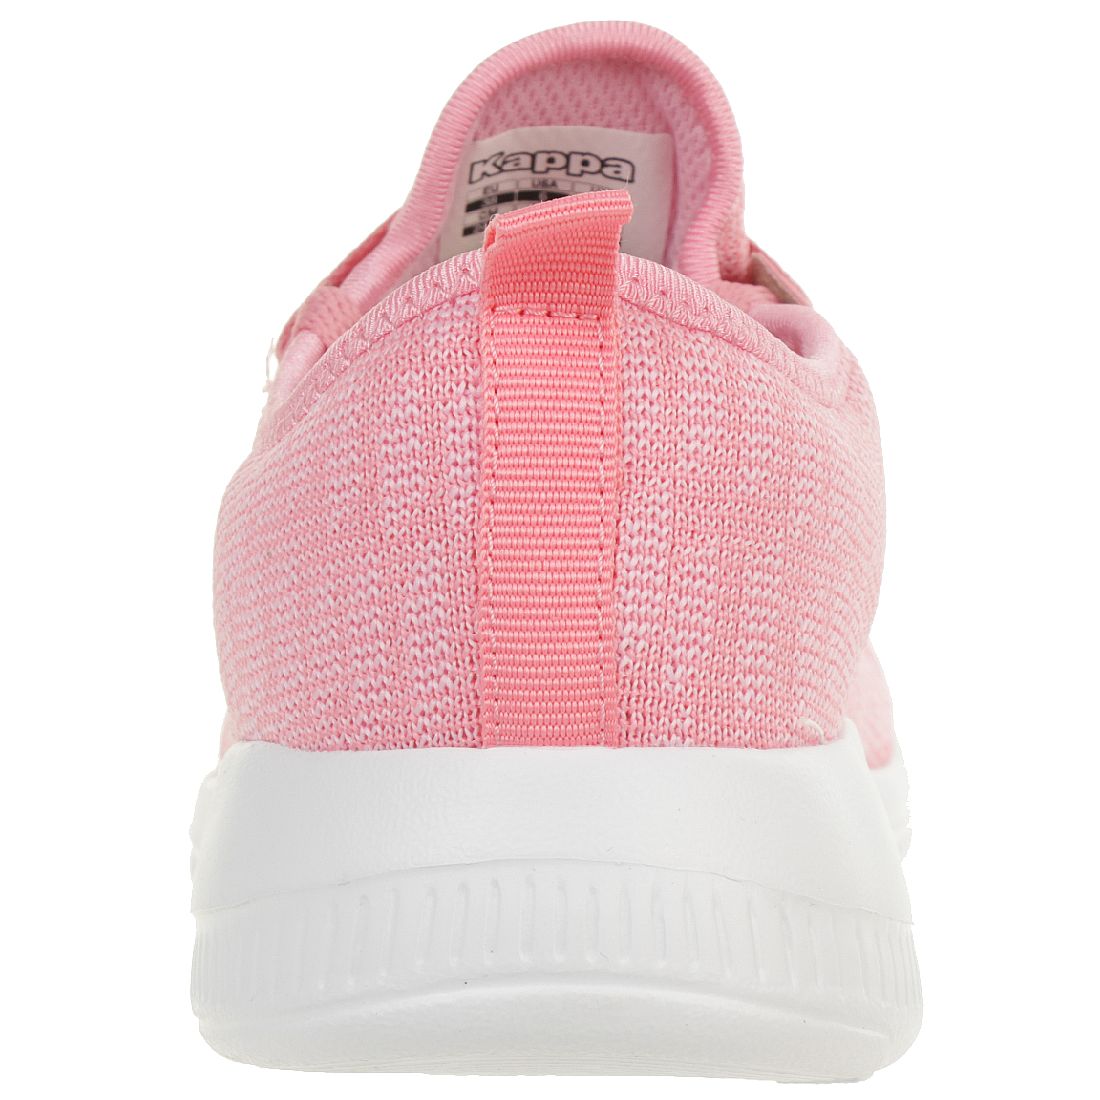 Kappa 242353 Sneaker Damen Turnschuhe Schuhe pink